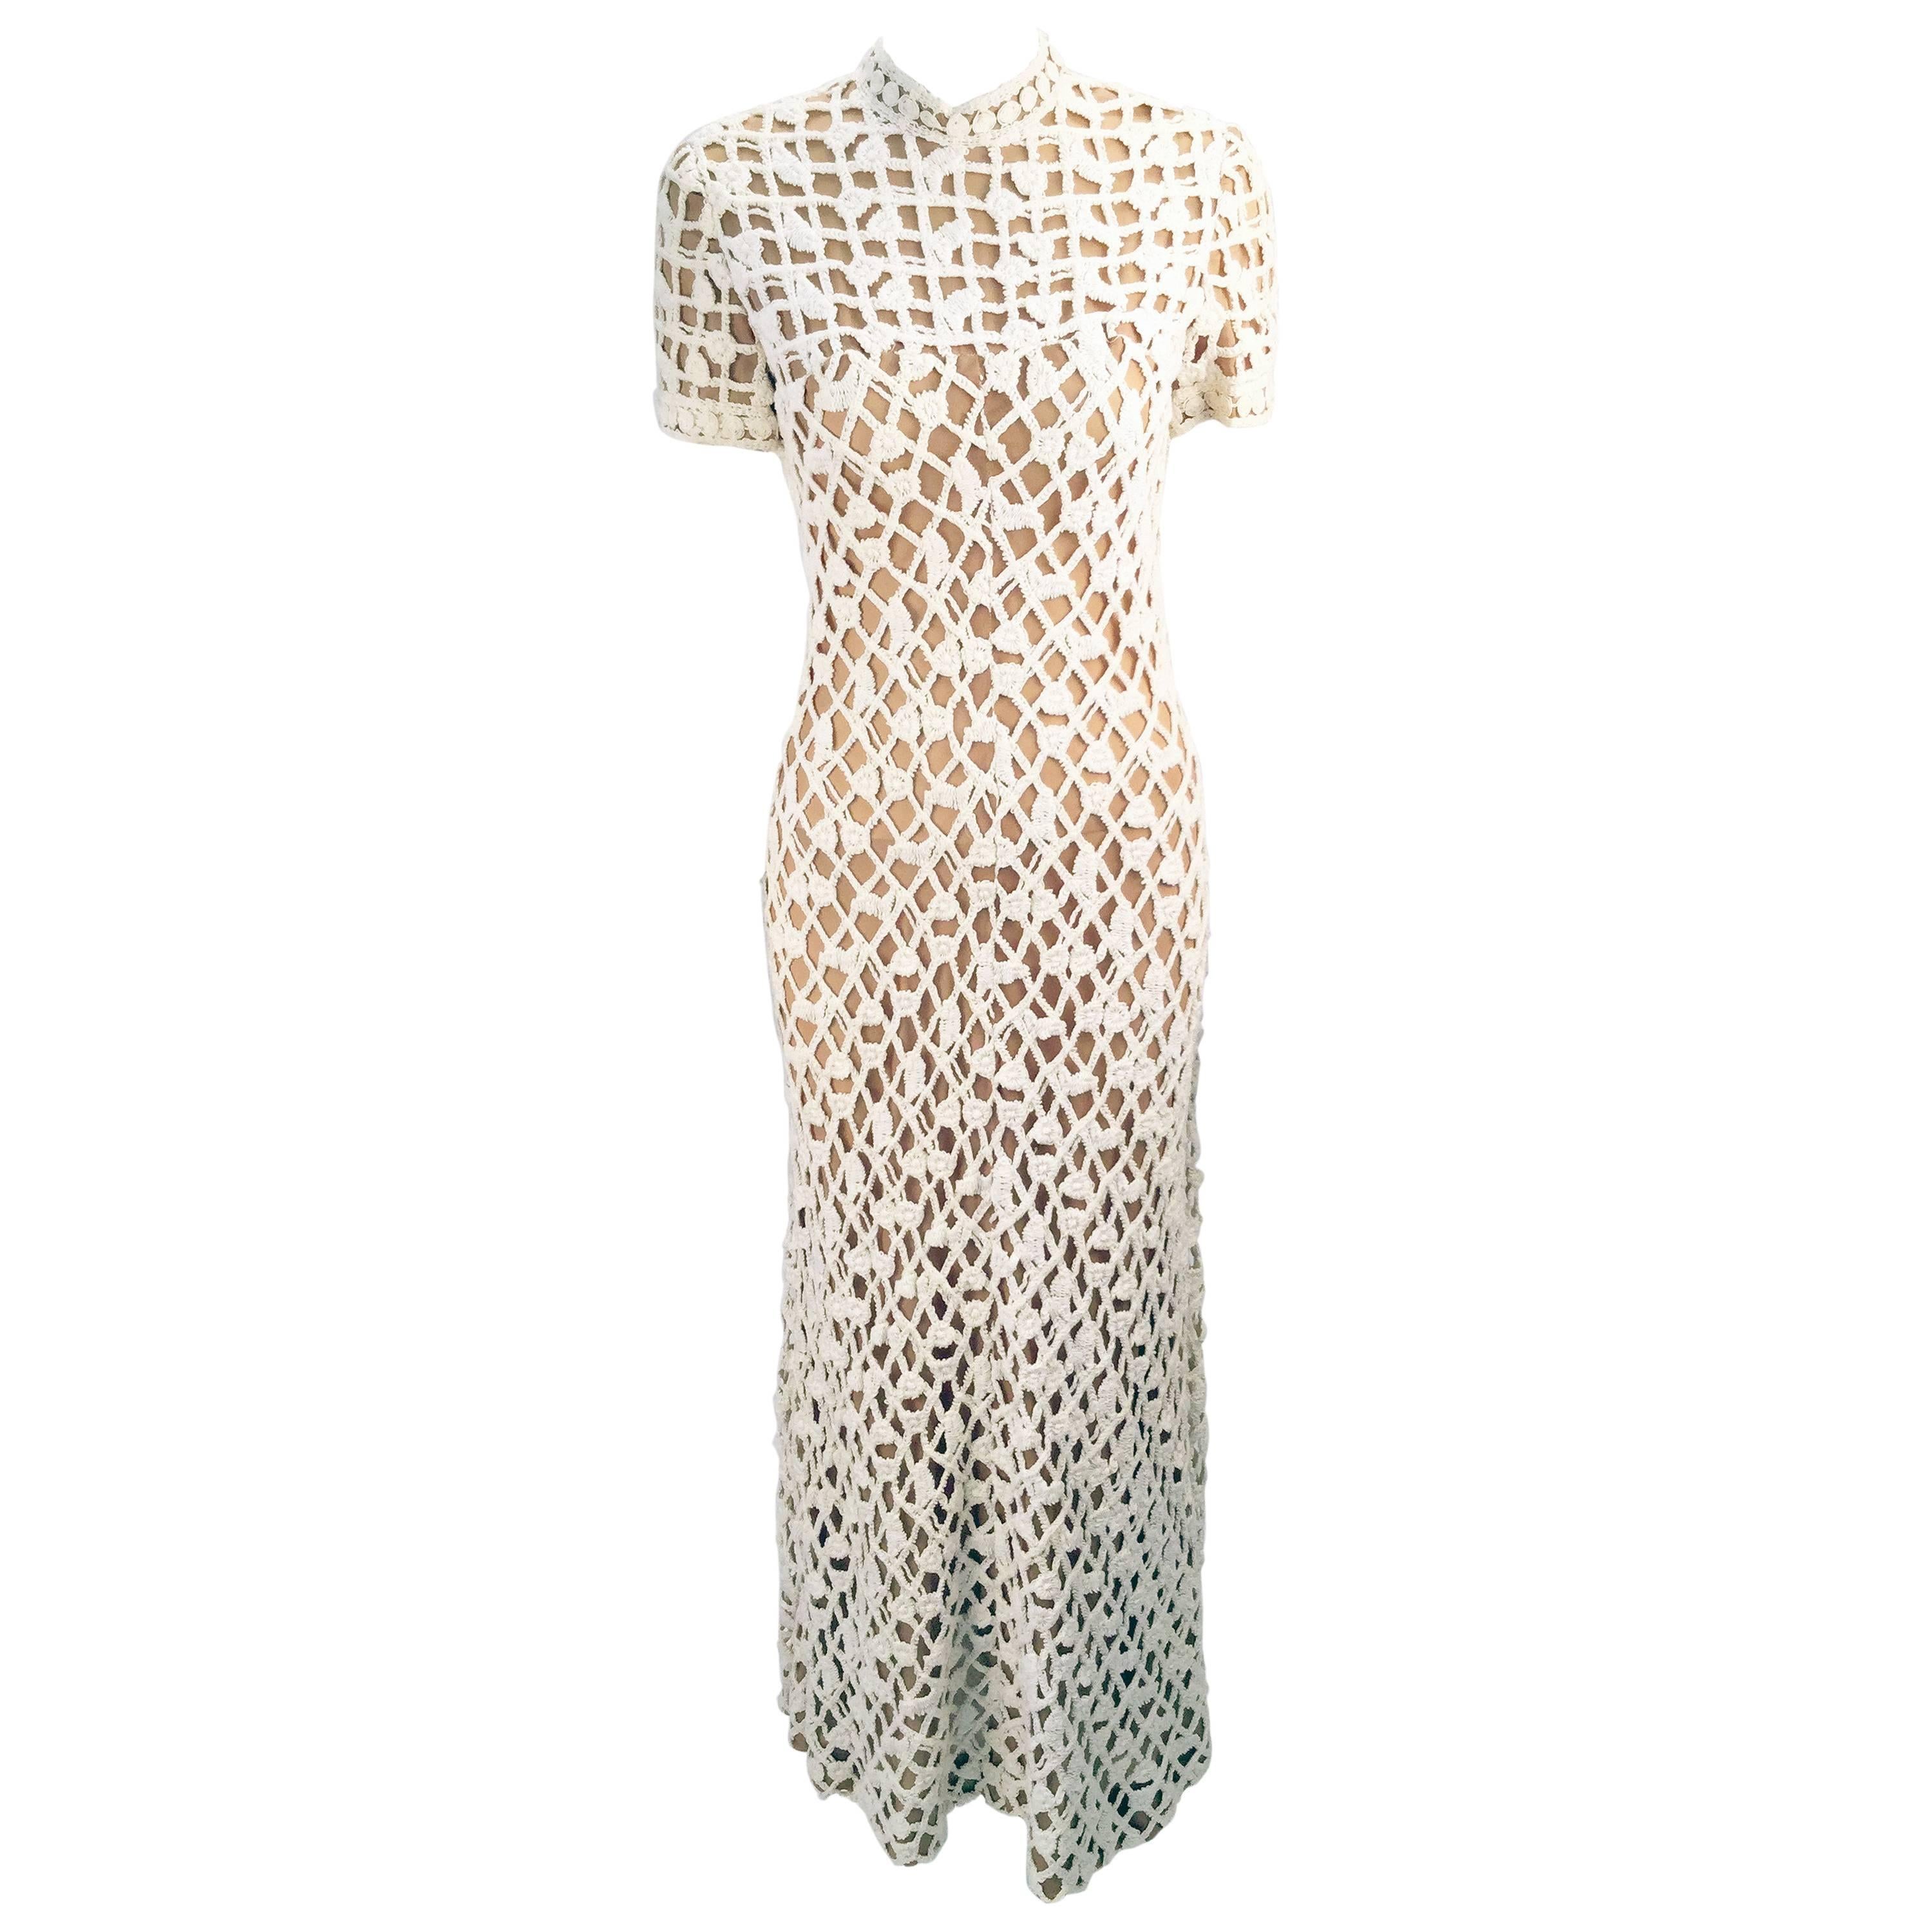 Pat Sandler for Neiman Marcus Cotton Lace Dress Gown, 1970s   For Sale